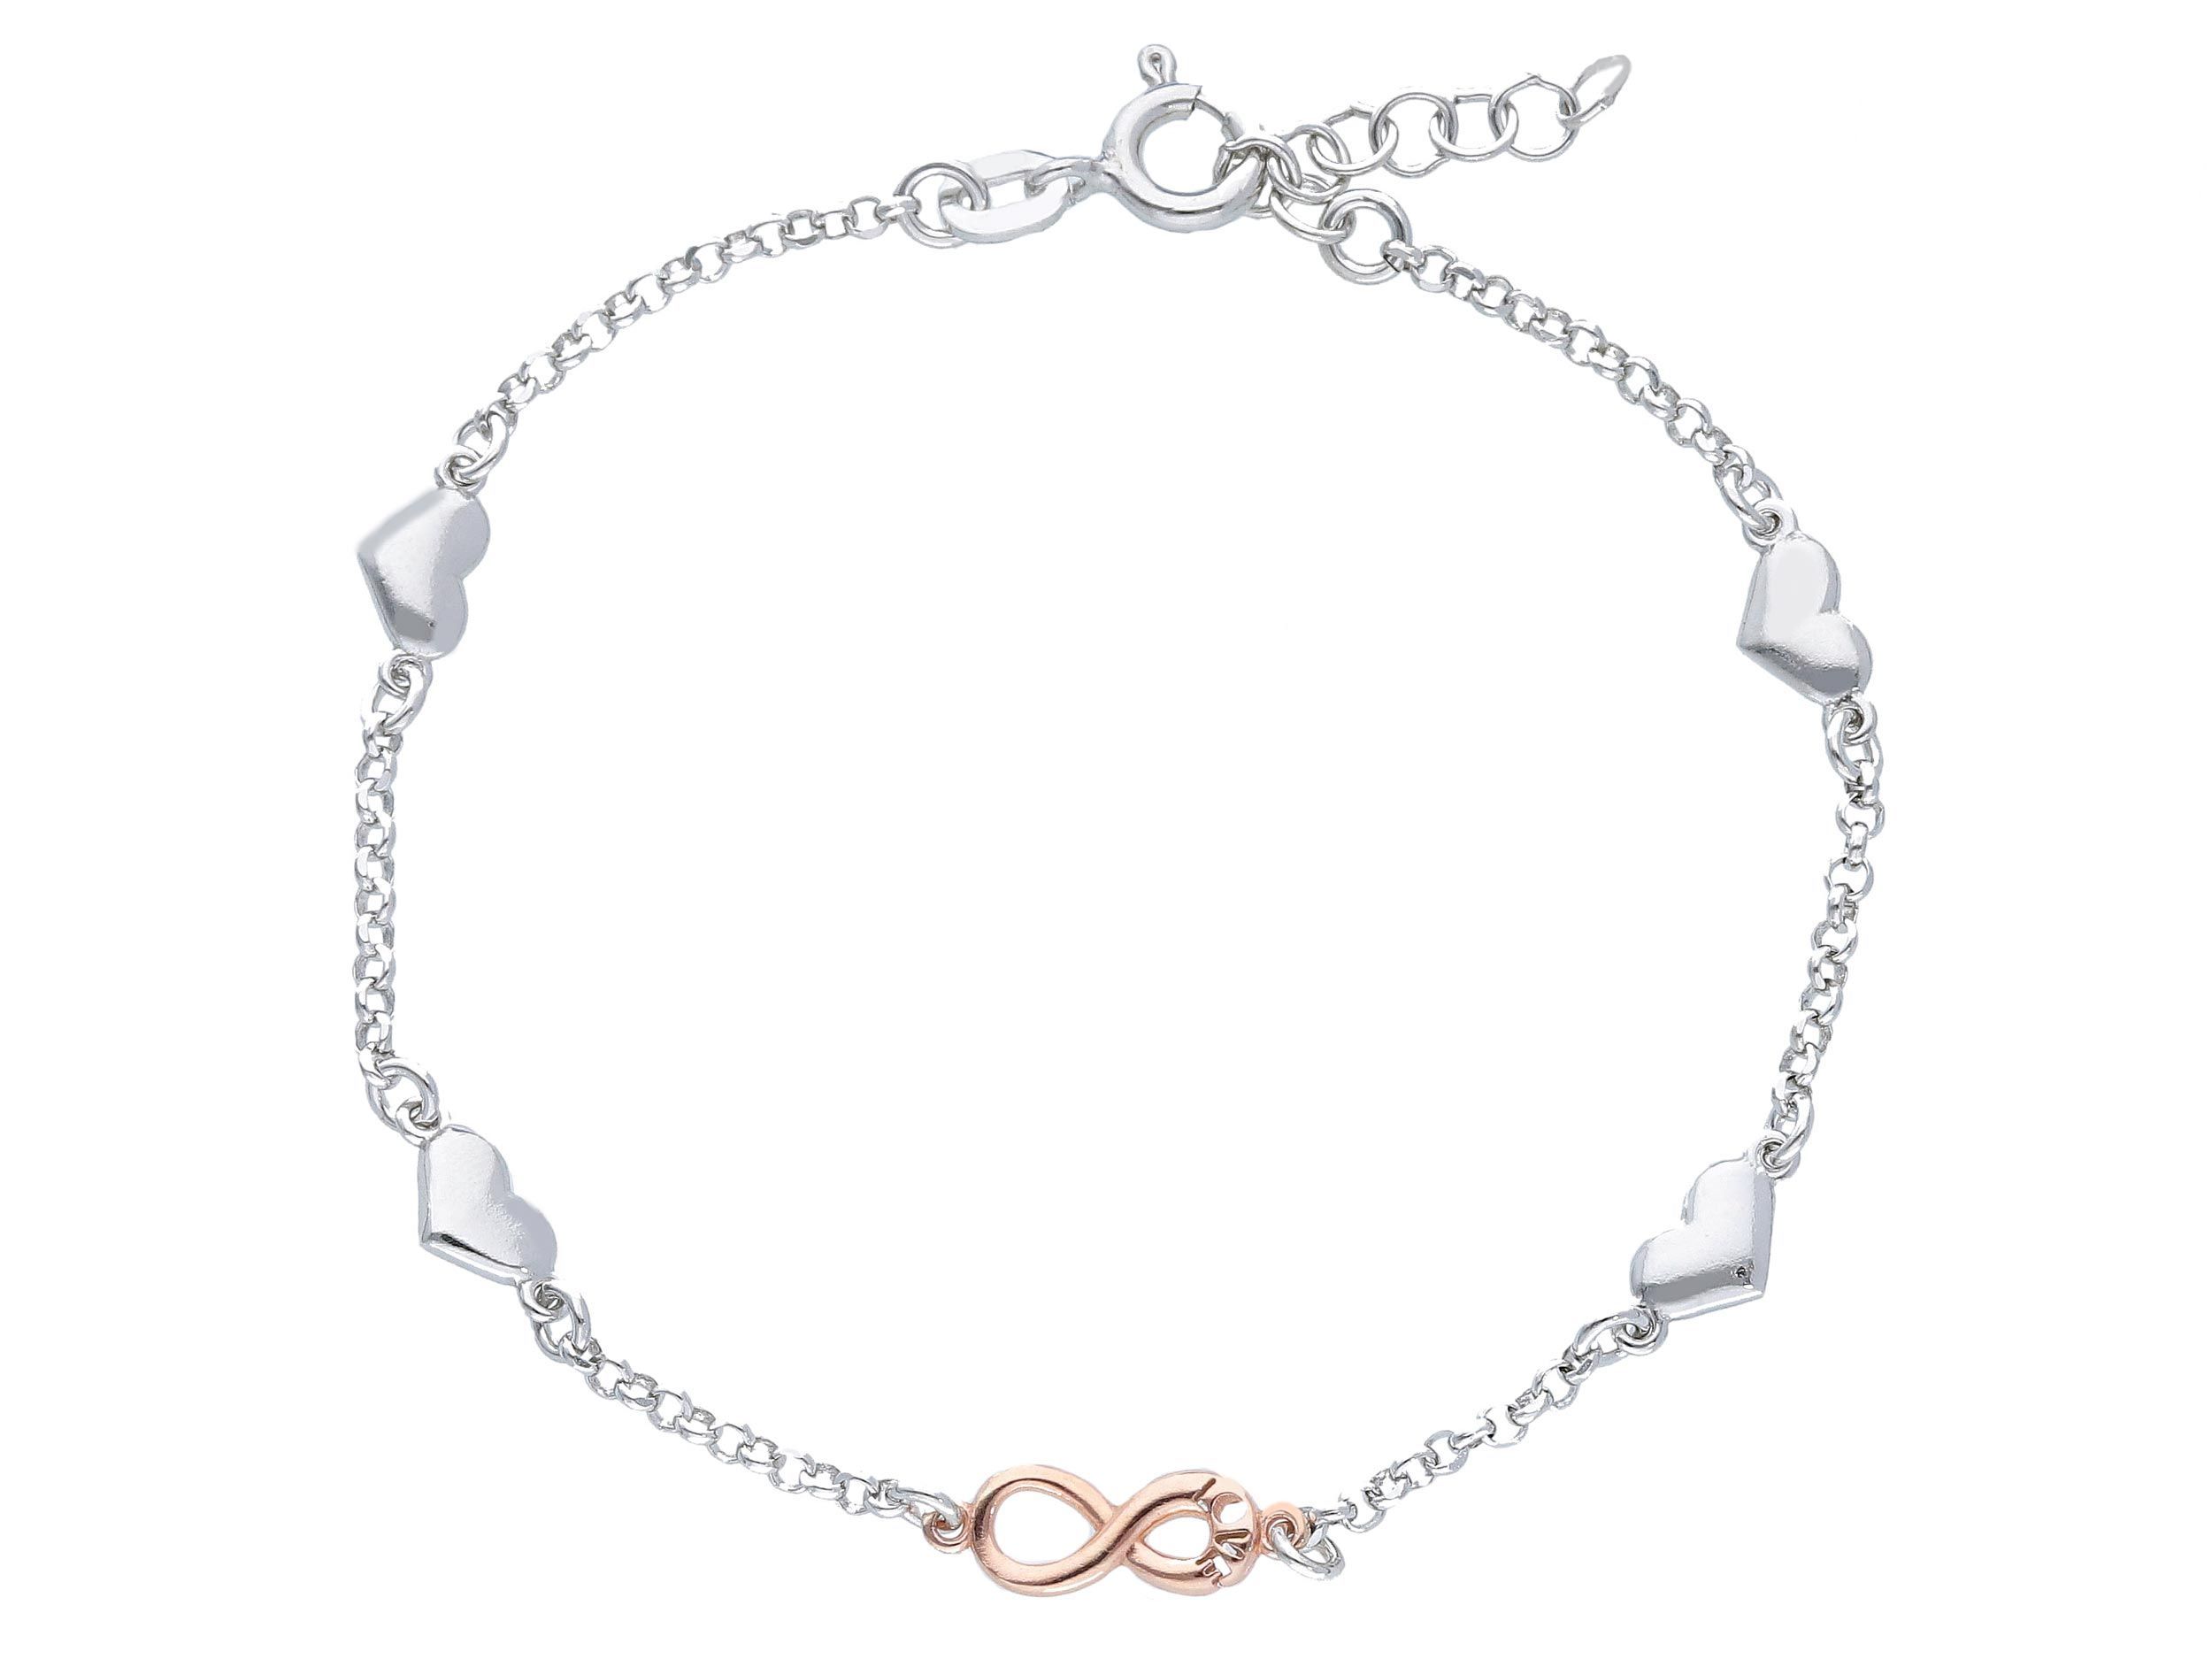  Platinum plated silver 925 bracelet (code S243629